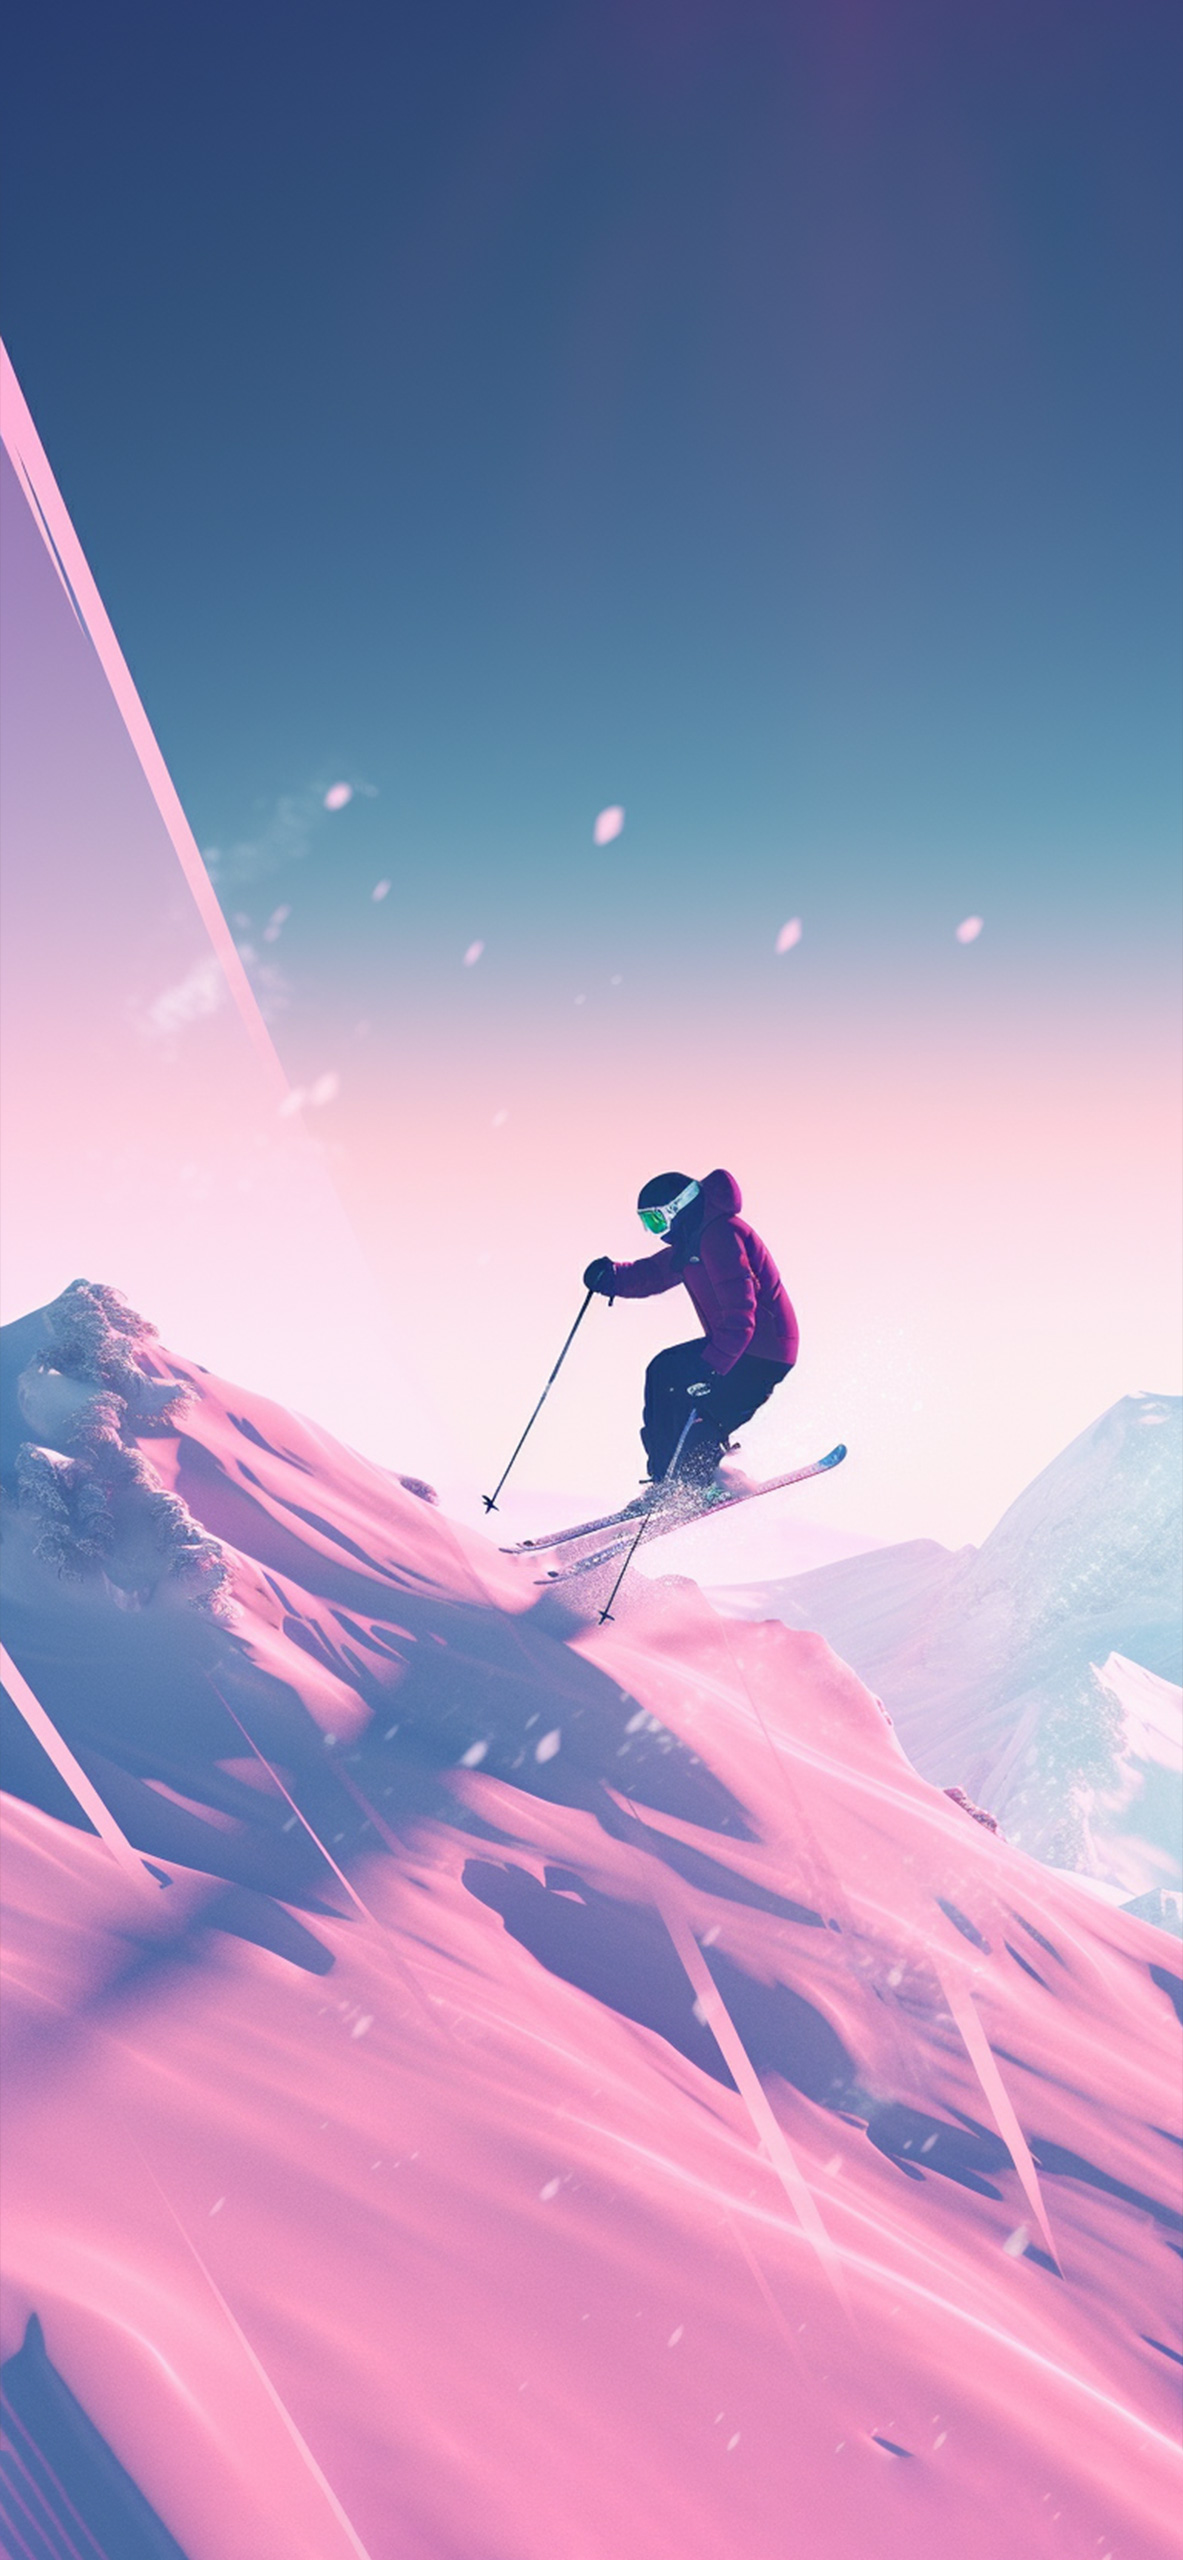 skiing down the mountain wallpaper